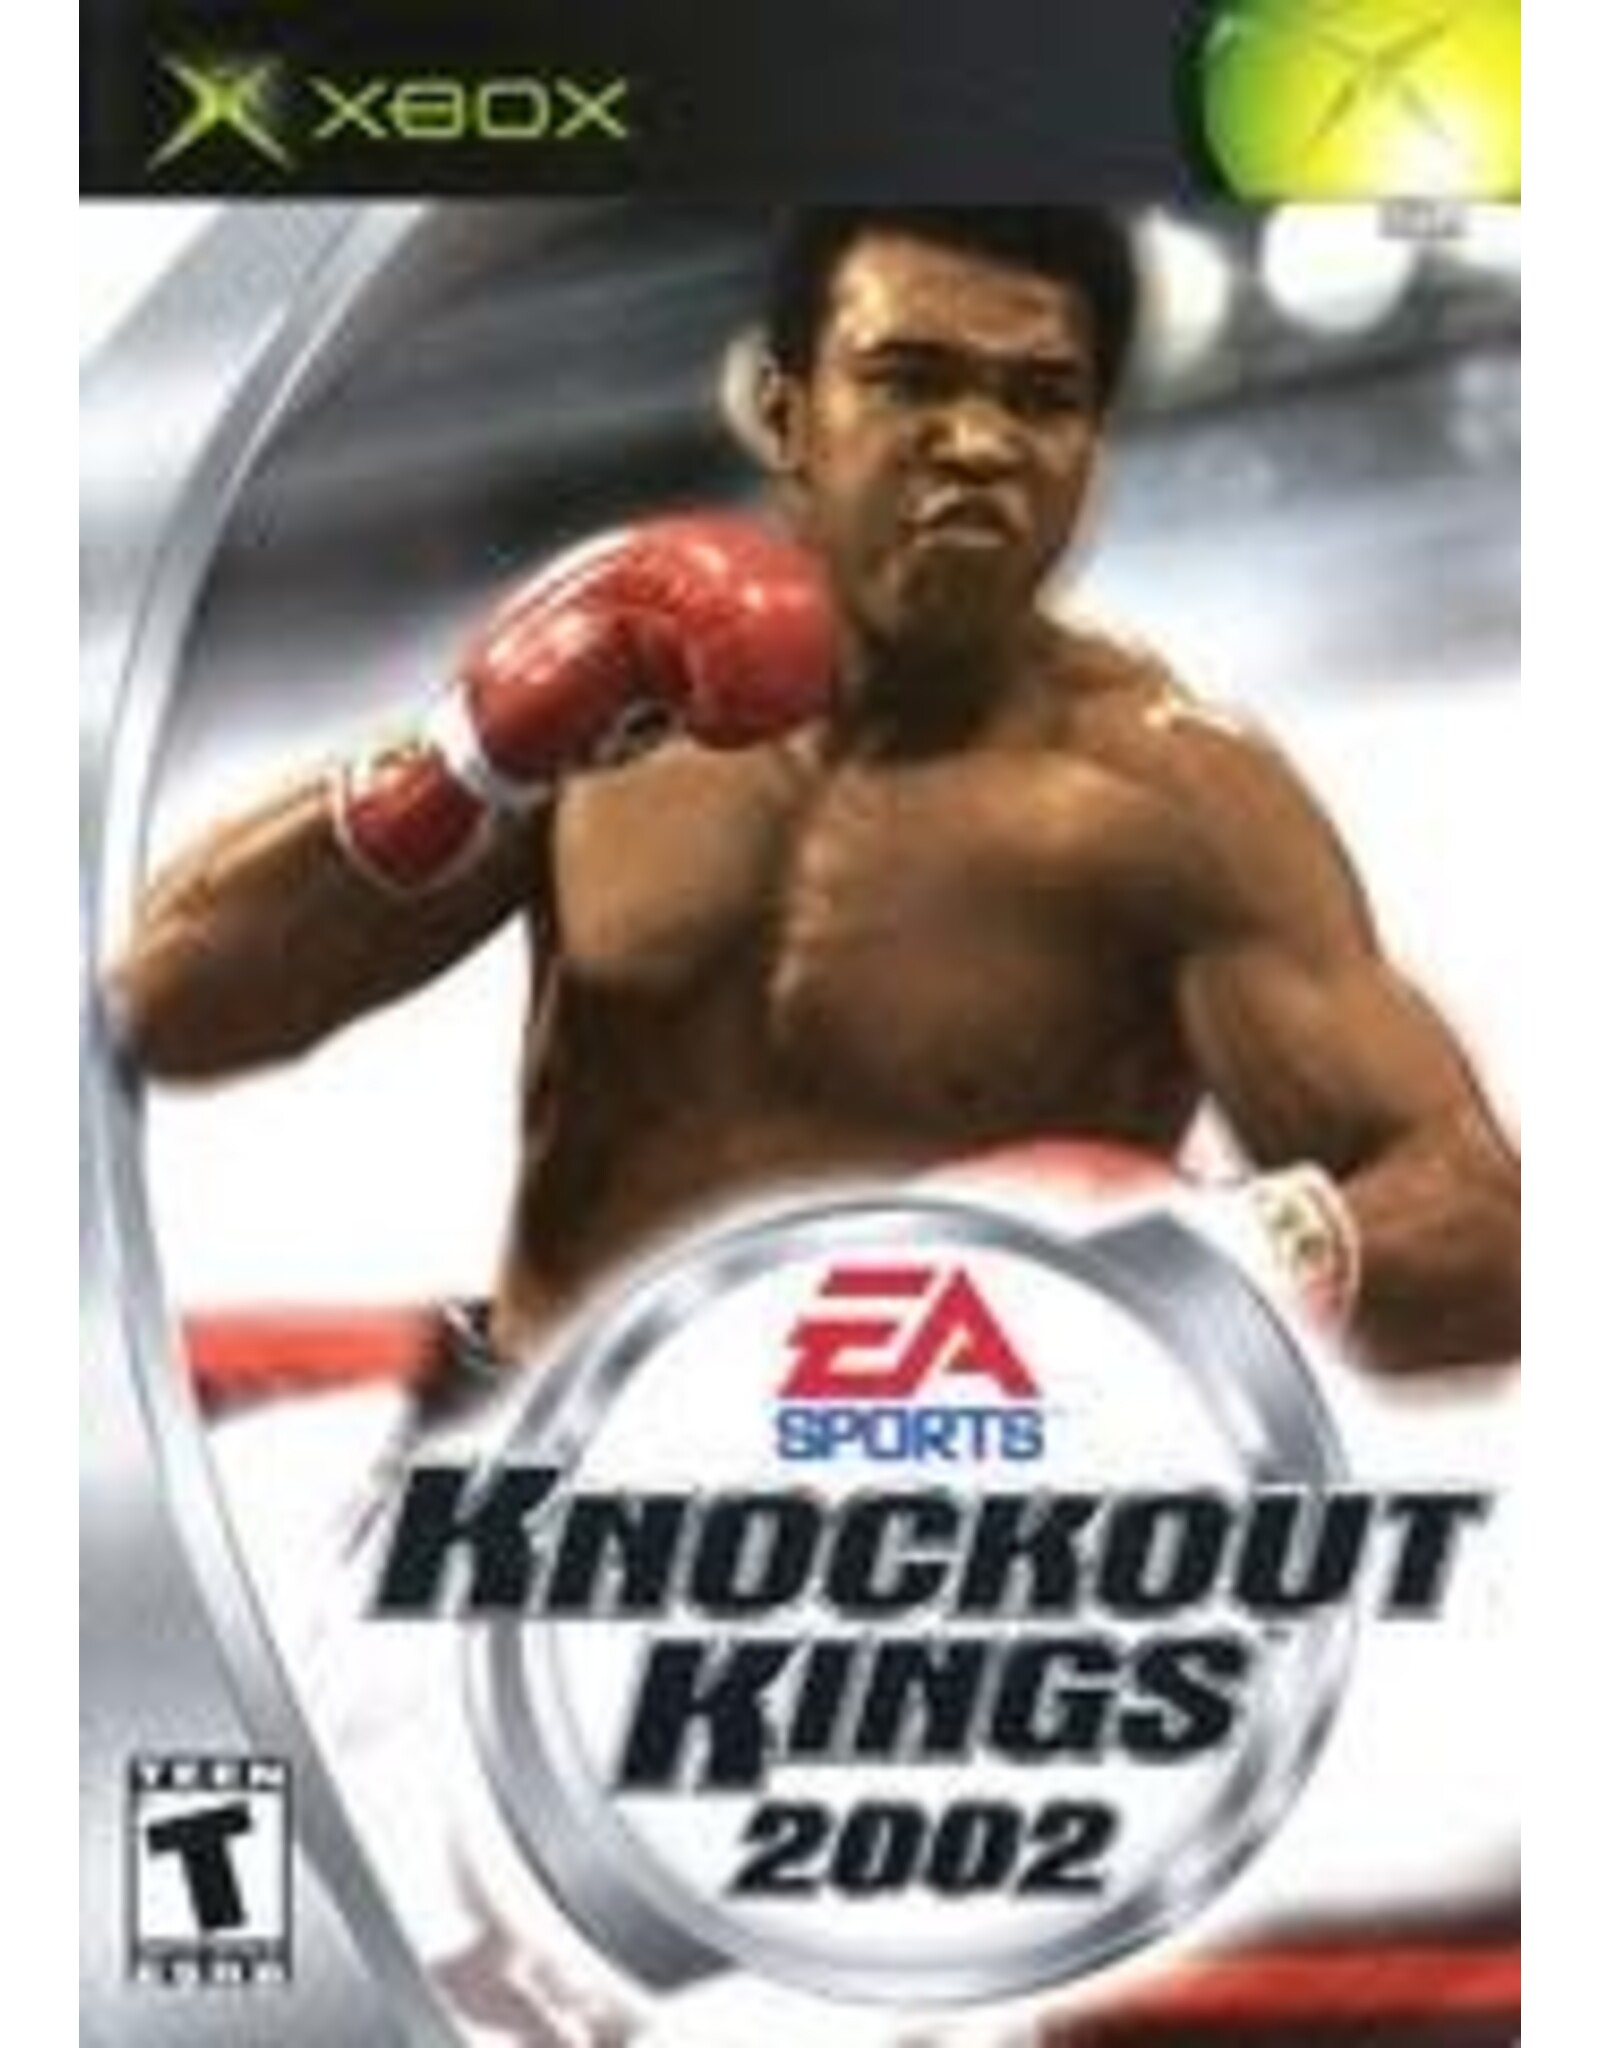 Xbox Knockout Kings 2002 (CiB, Water Damaged Back Sleeve)